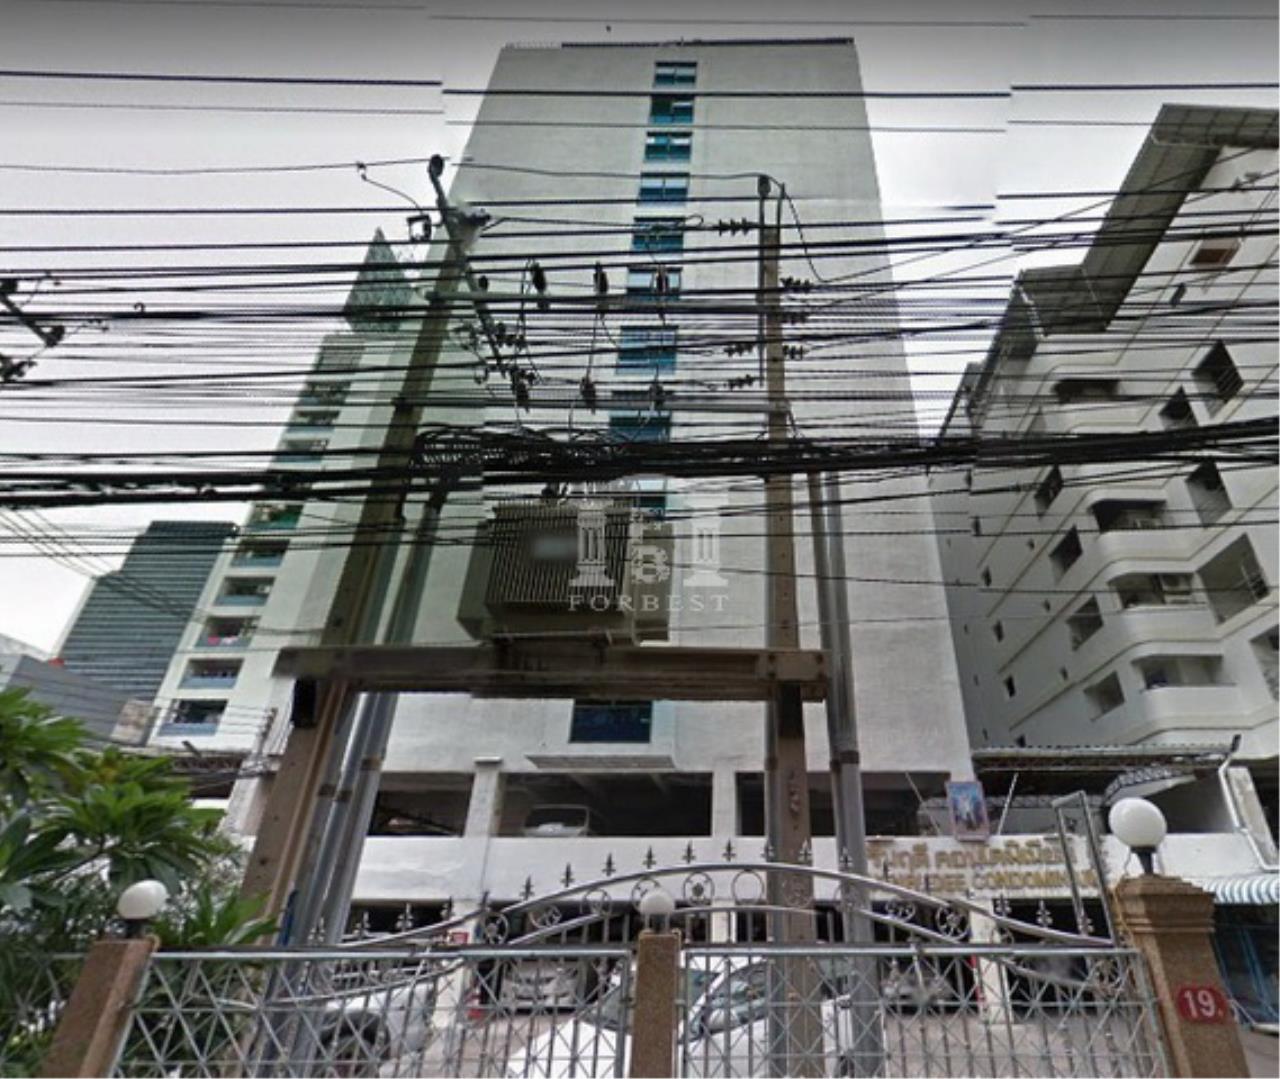 Forbest Properties Agency's 40094 - Ruenruedee Condominium for sale, near Bumrungrad Hospital, Sukhumvit, area 62 sq.m. 1